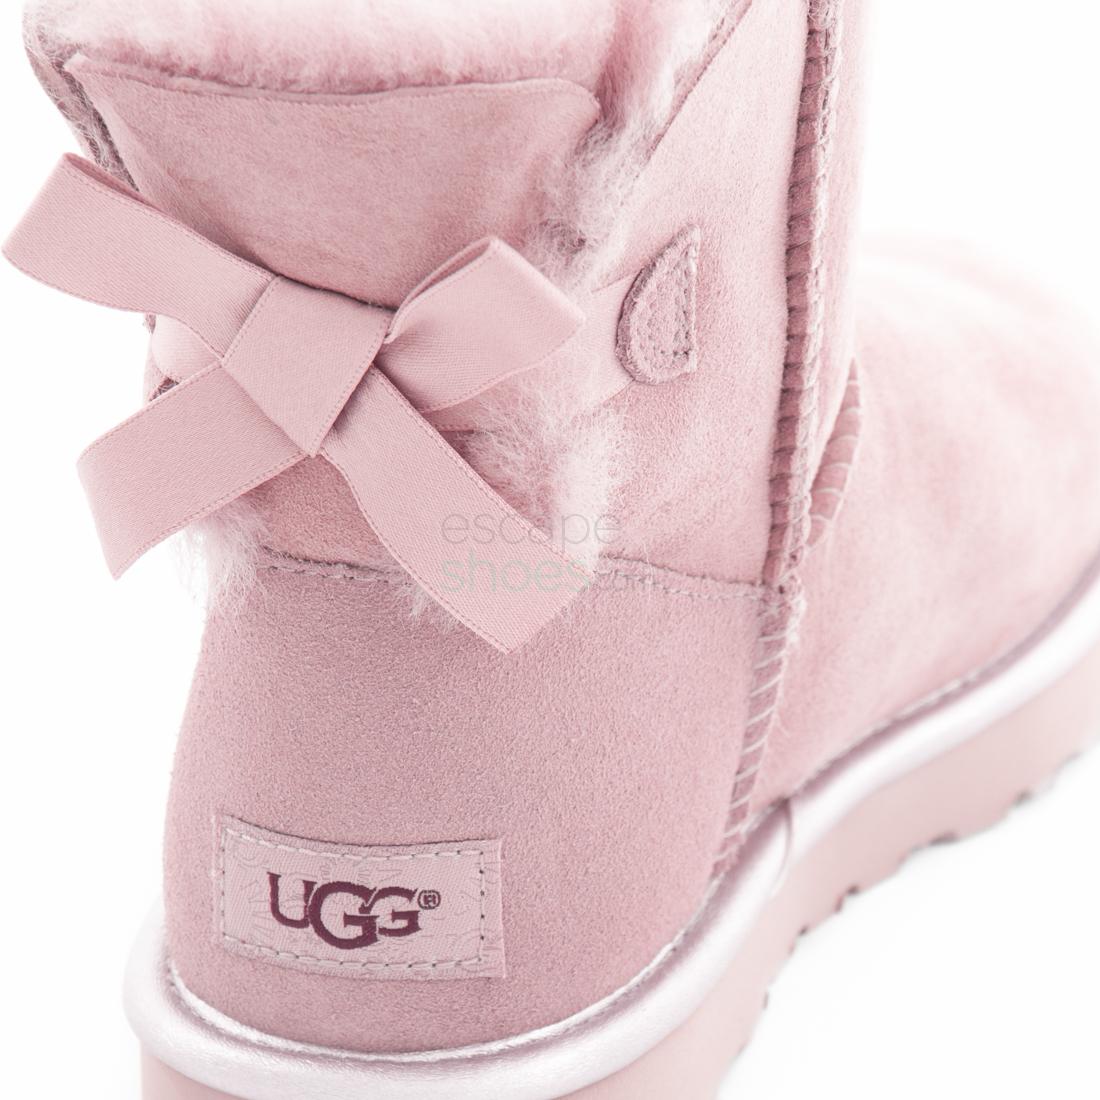 ugg boots mini bailey bow rosa